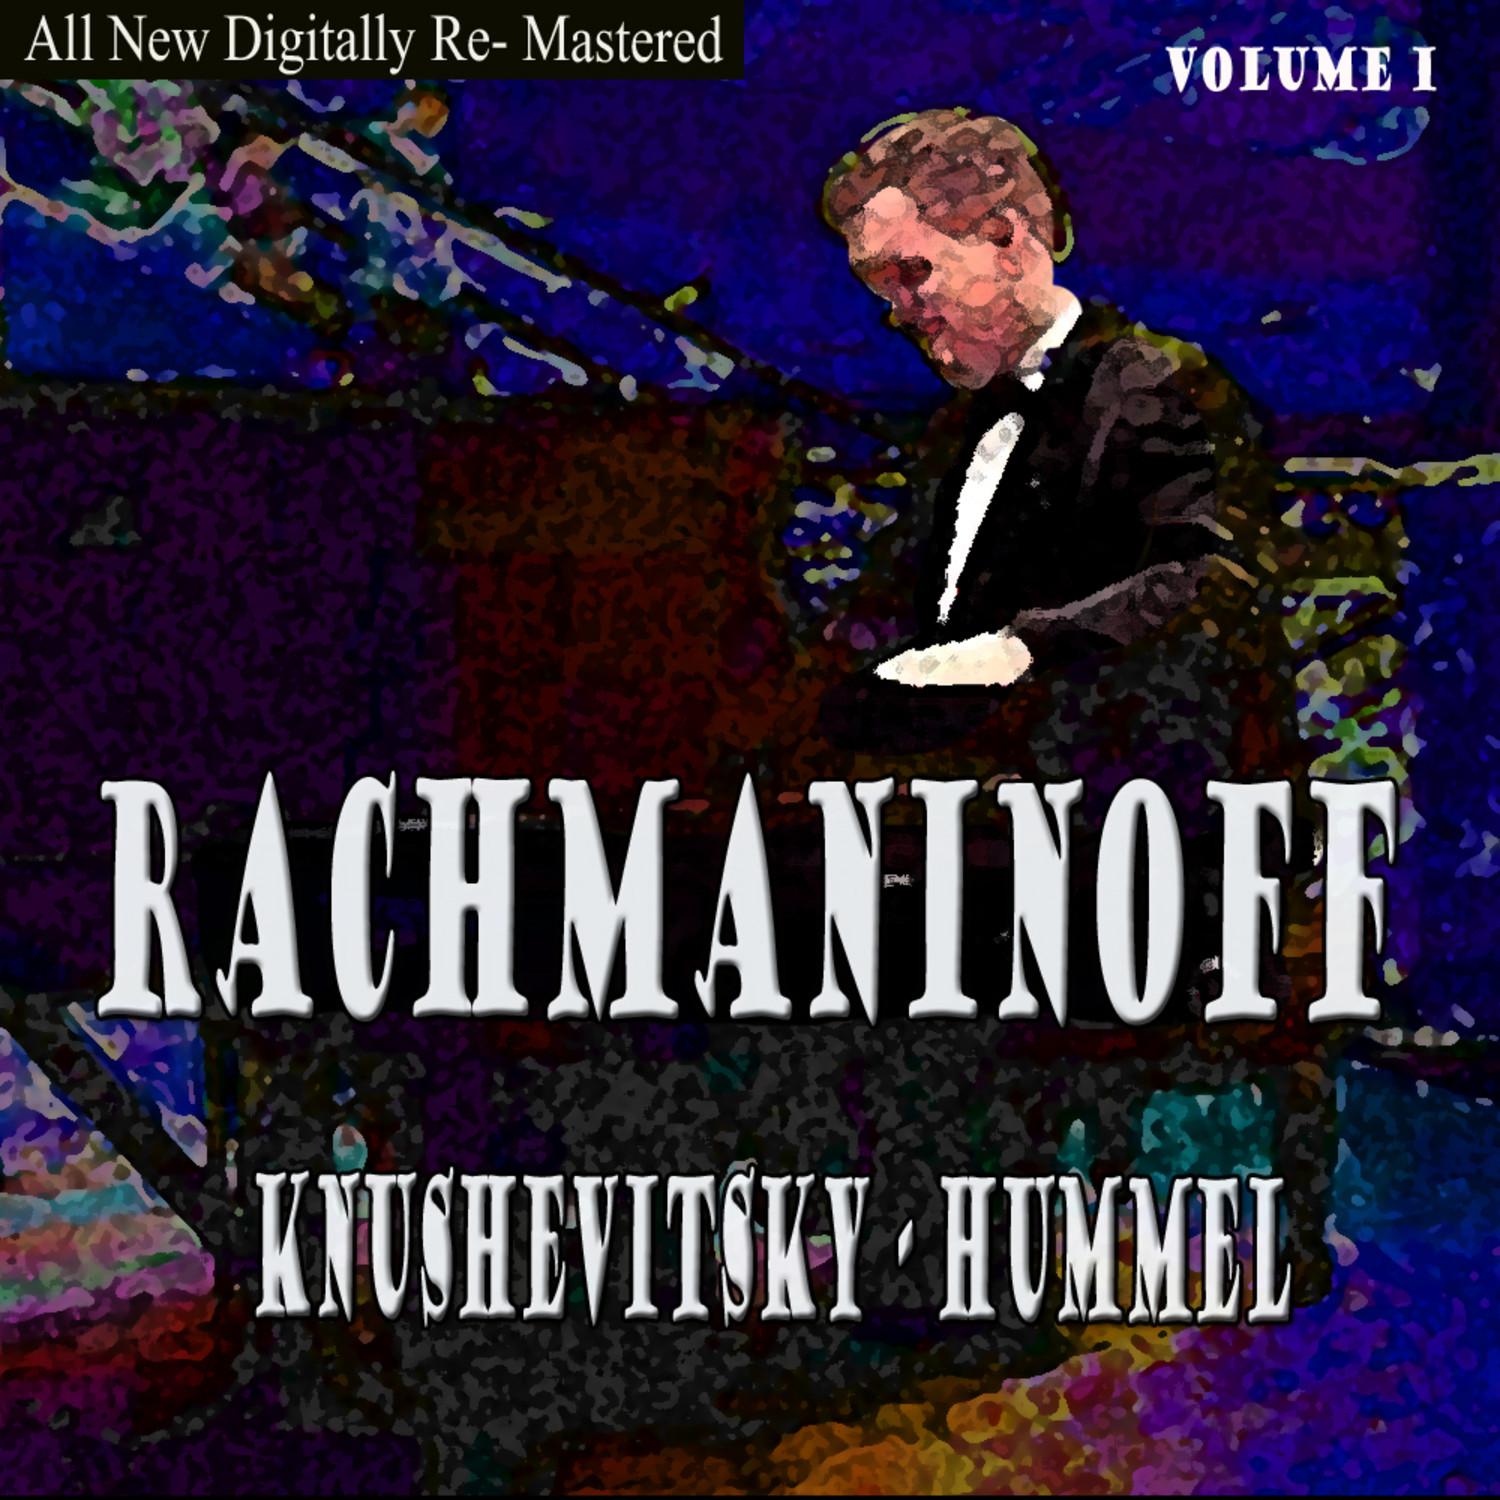 Rachmaninoff, Hummel - Knushevitsky Volume 1